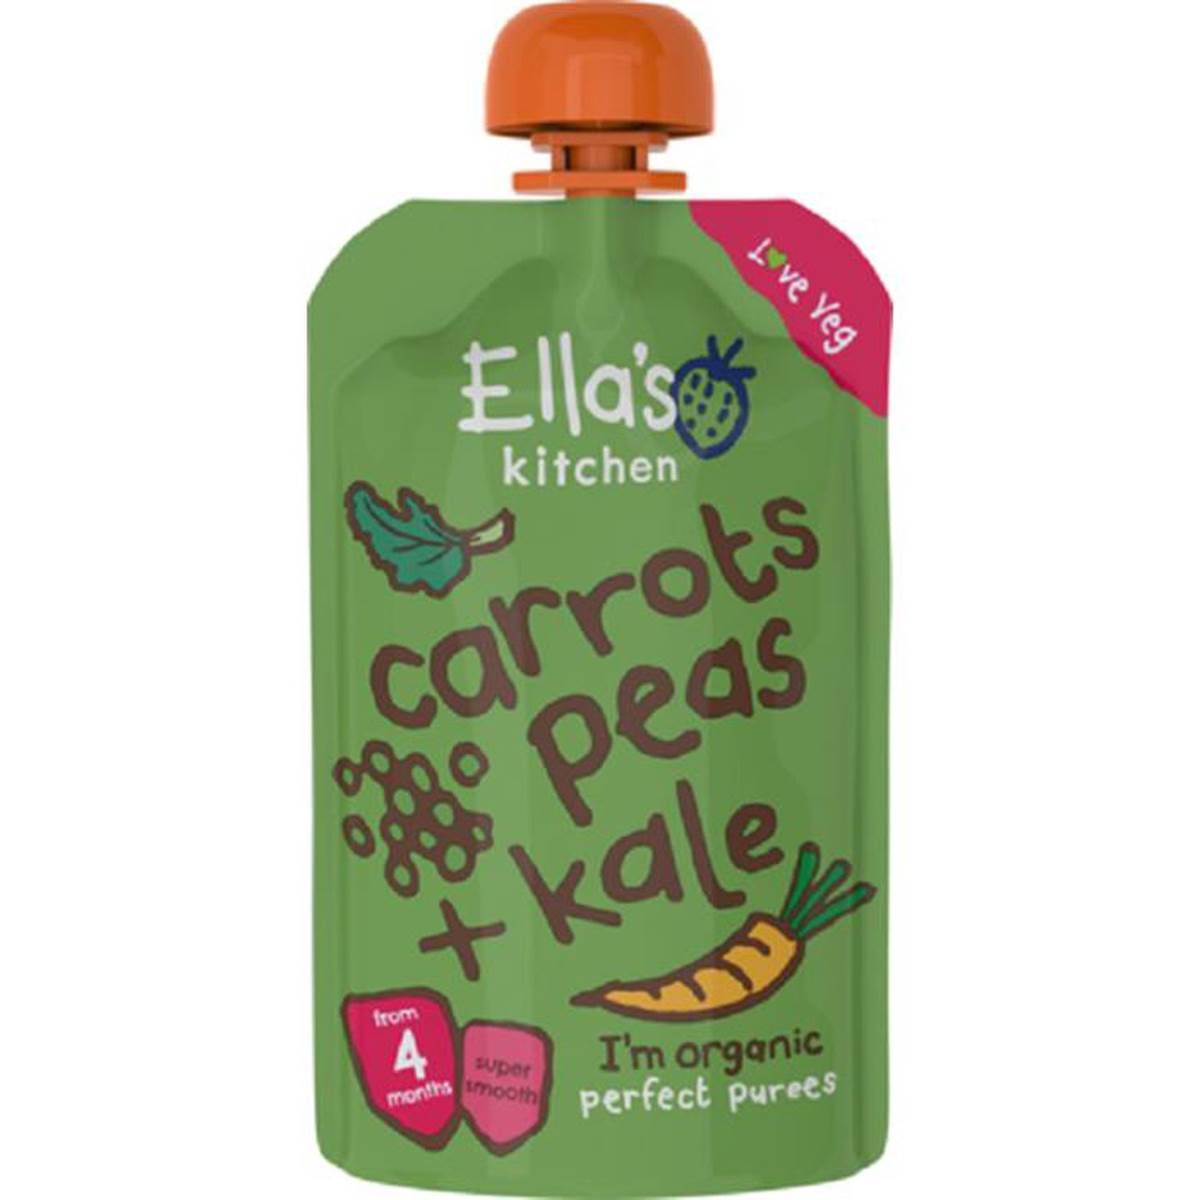 Ellas Kitchen Carrots Peas + Kale - 120g